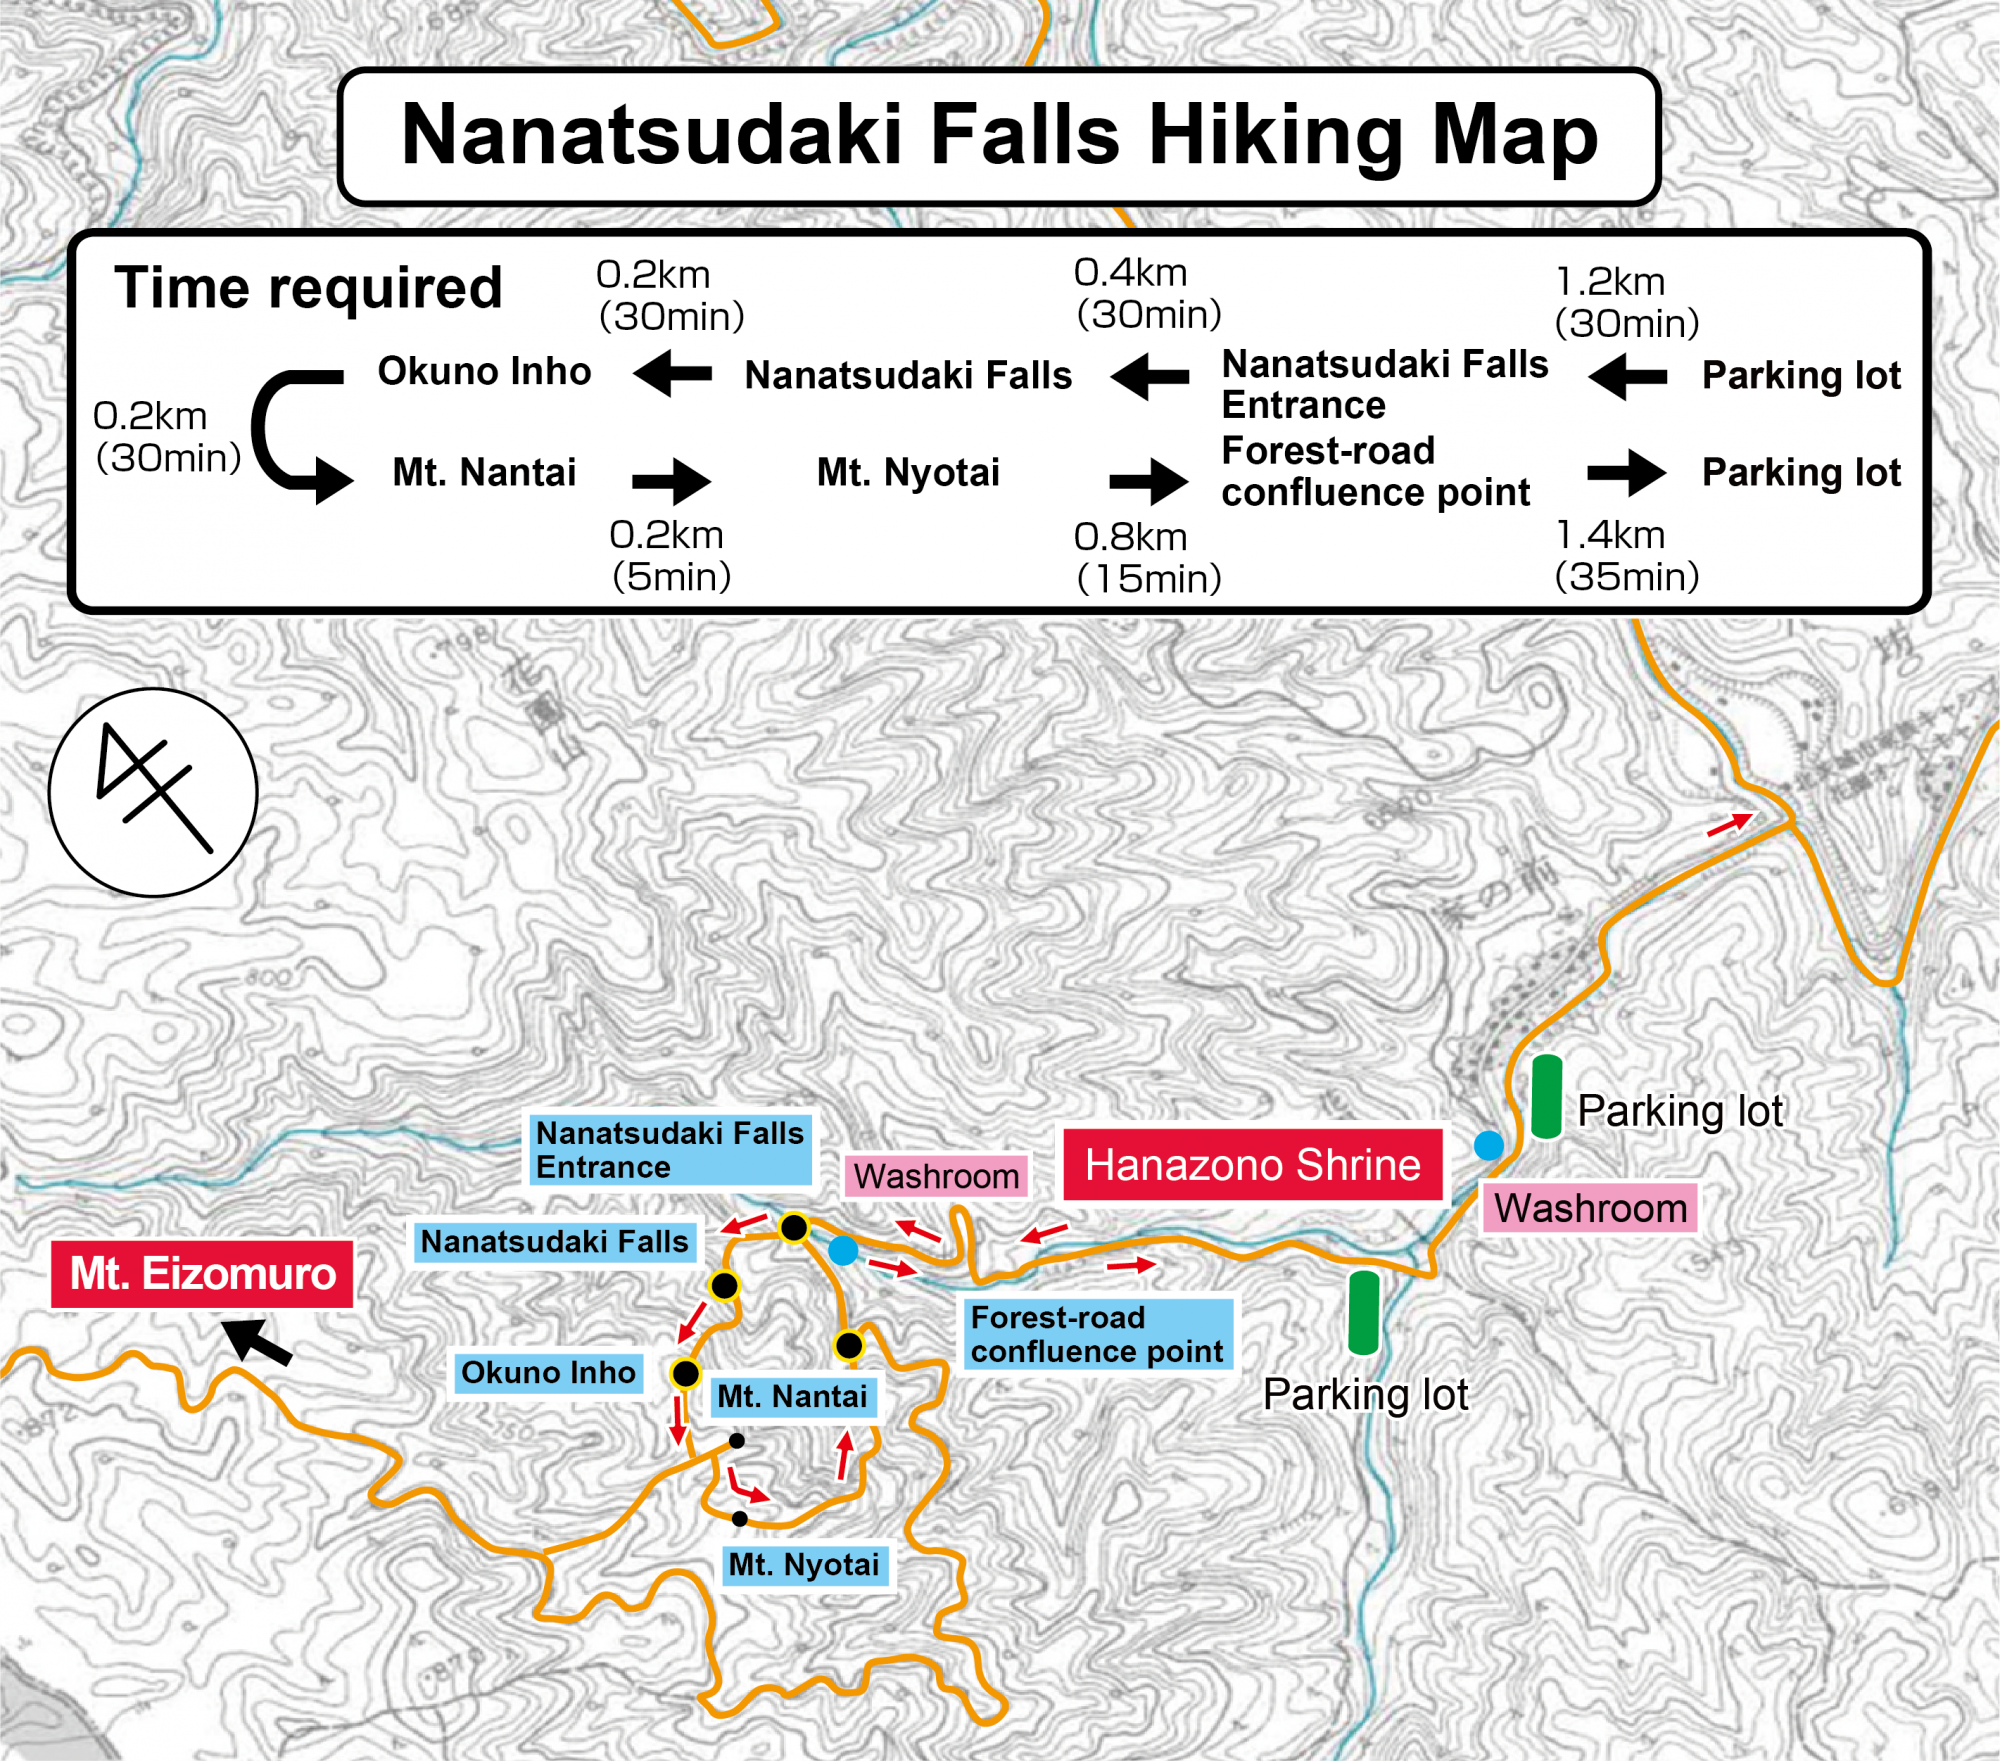 『『『You can hike from the parking lot here at Hanazono Shrine to the Nanatsudaki Falls.』の画像』の画像』の画像